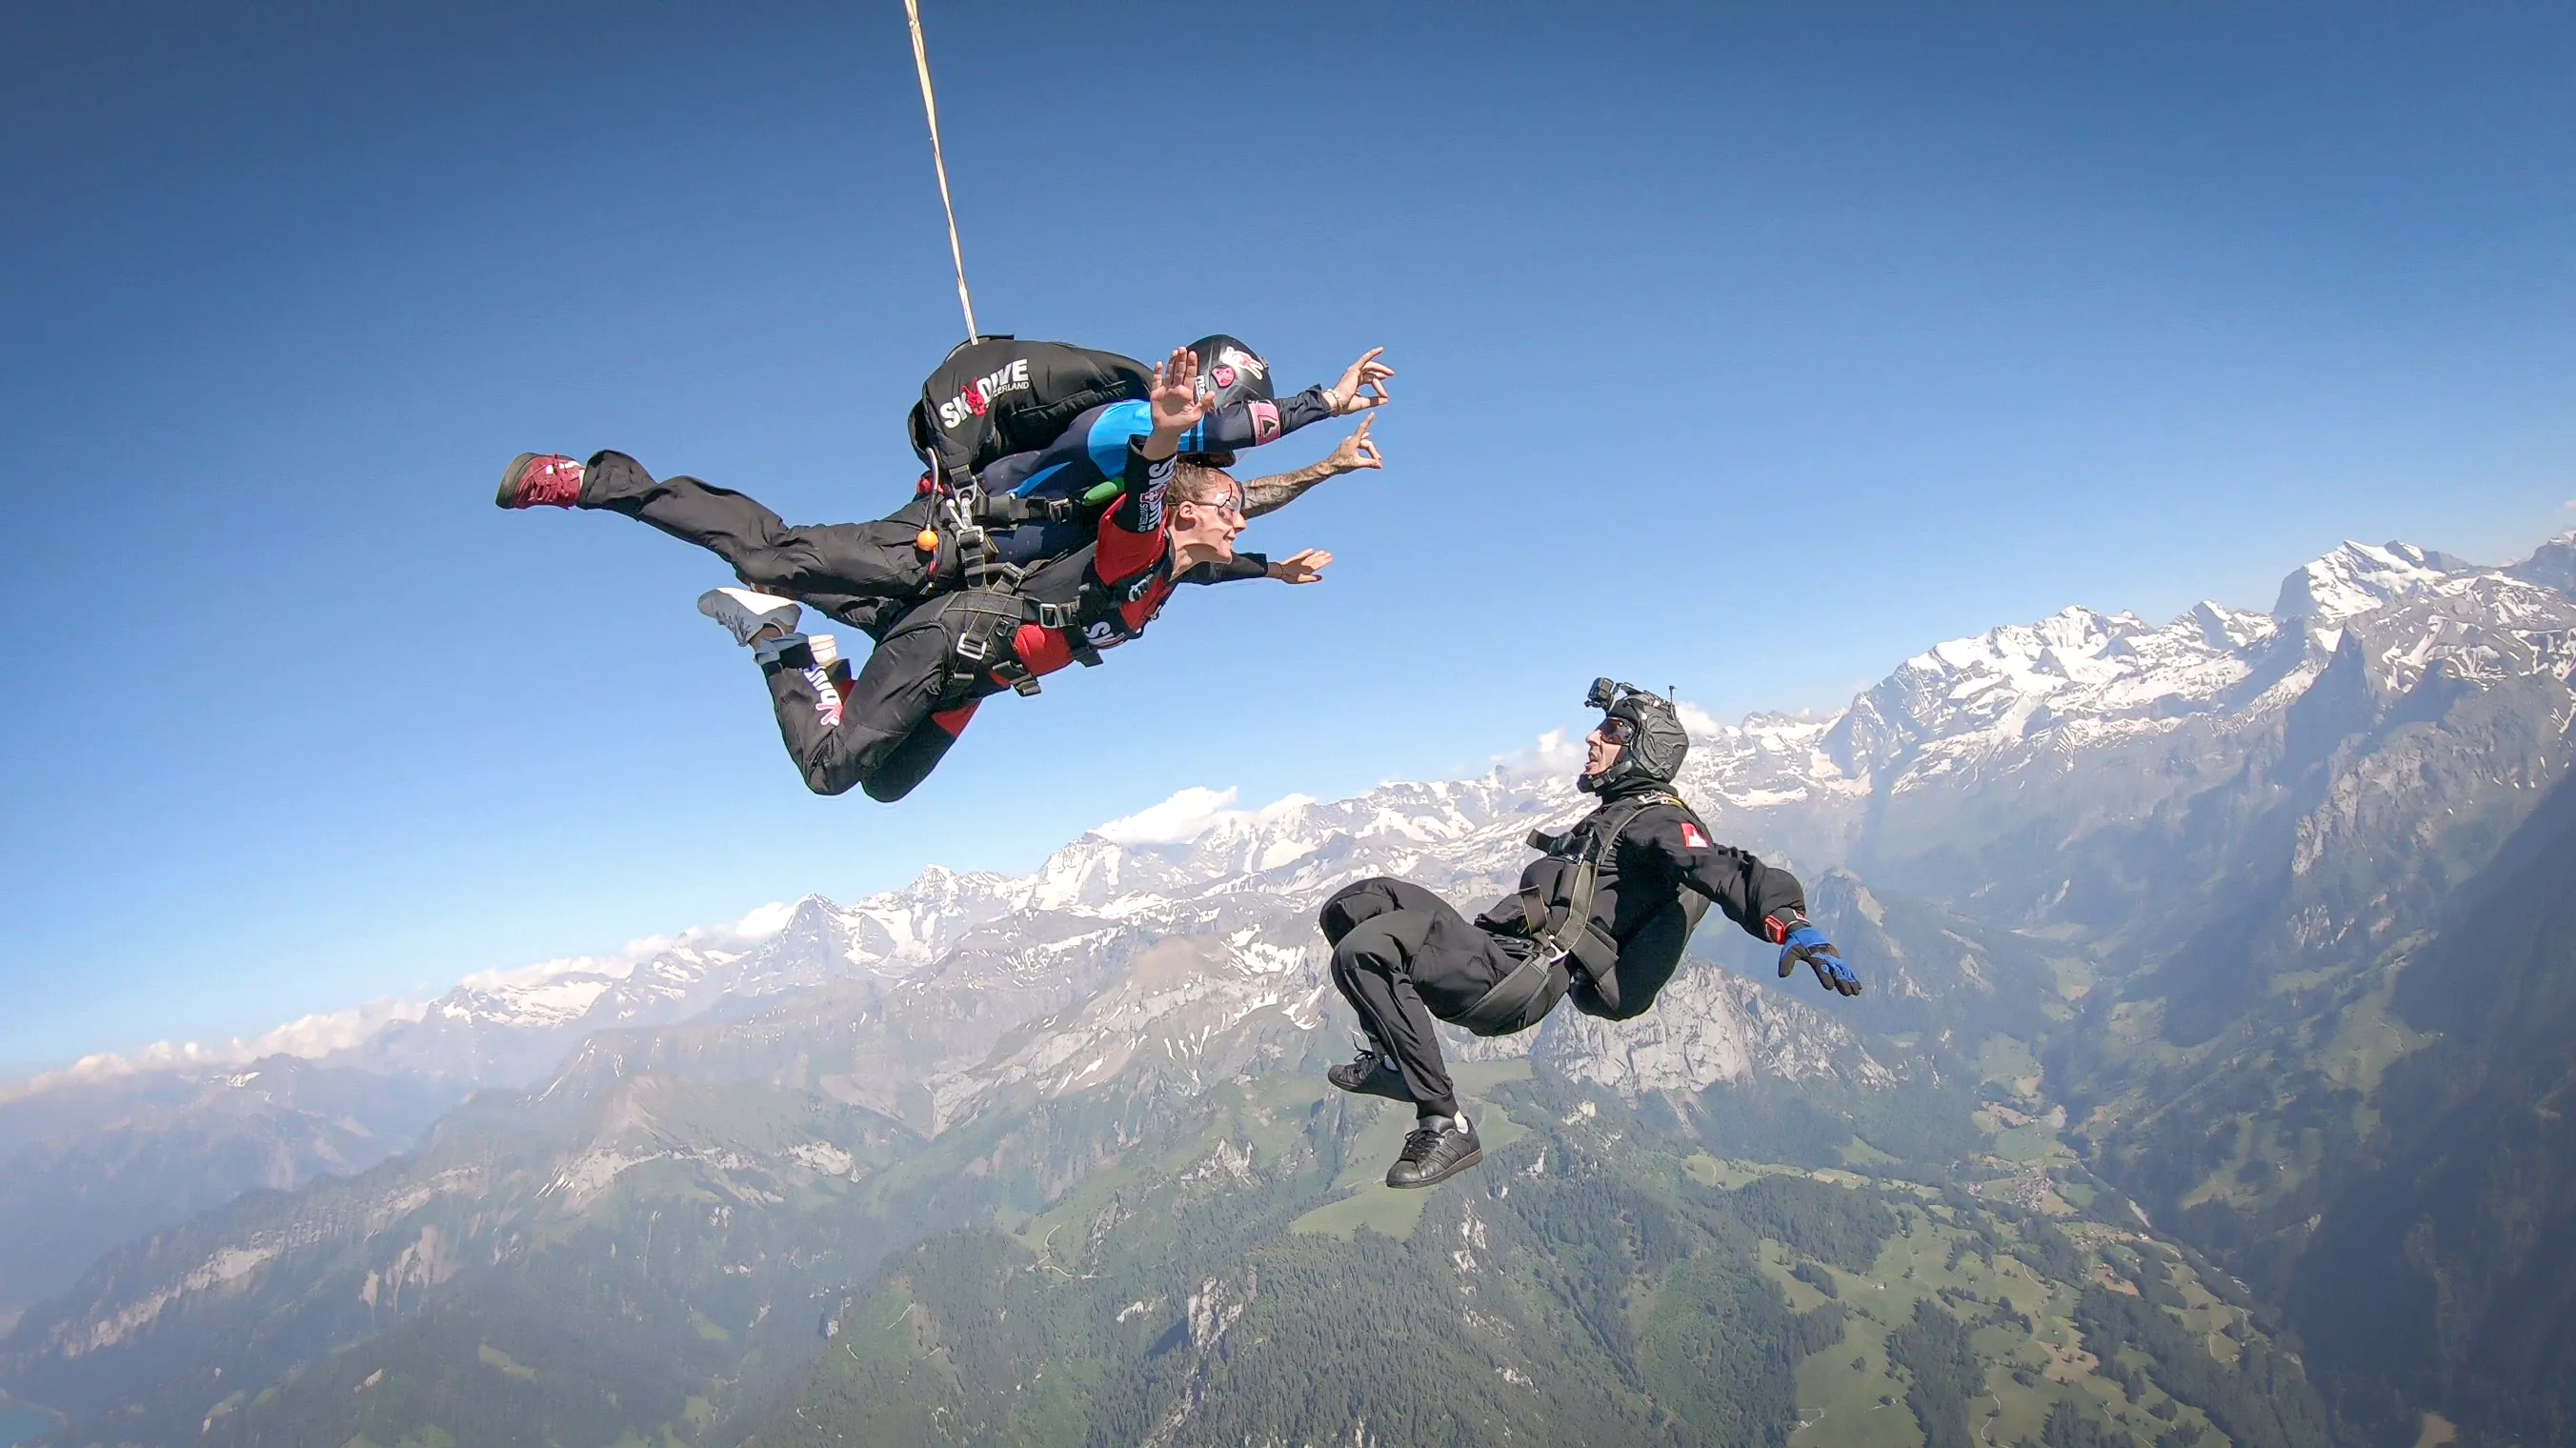 Skydive Switzerland Interlaken in Switzerland, Europe | Skydiving - Rated 4.7